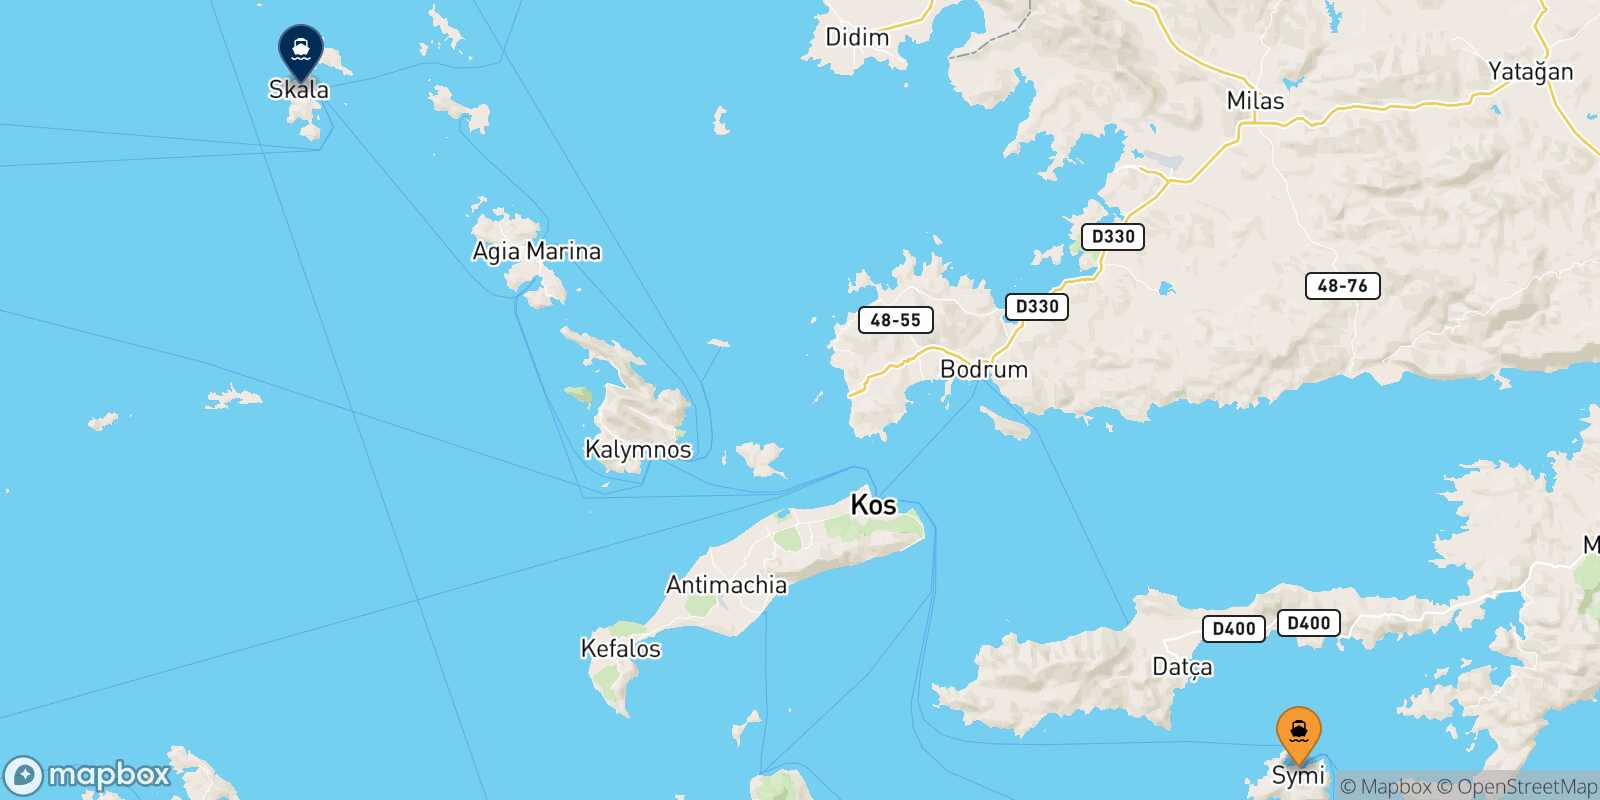 Symi Patmos route map